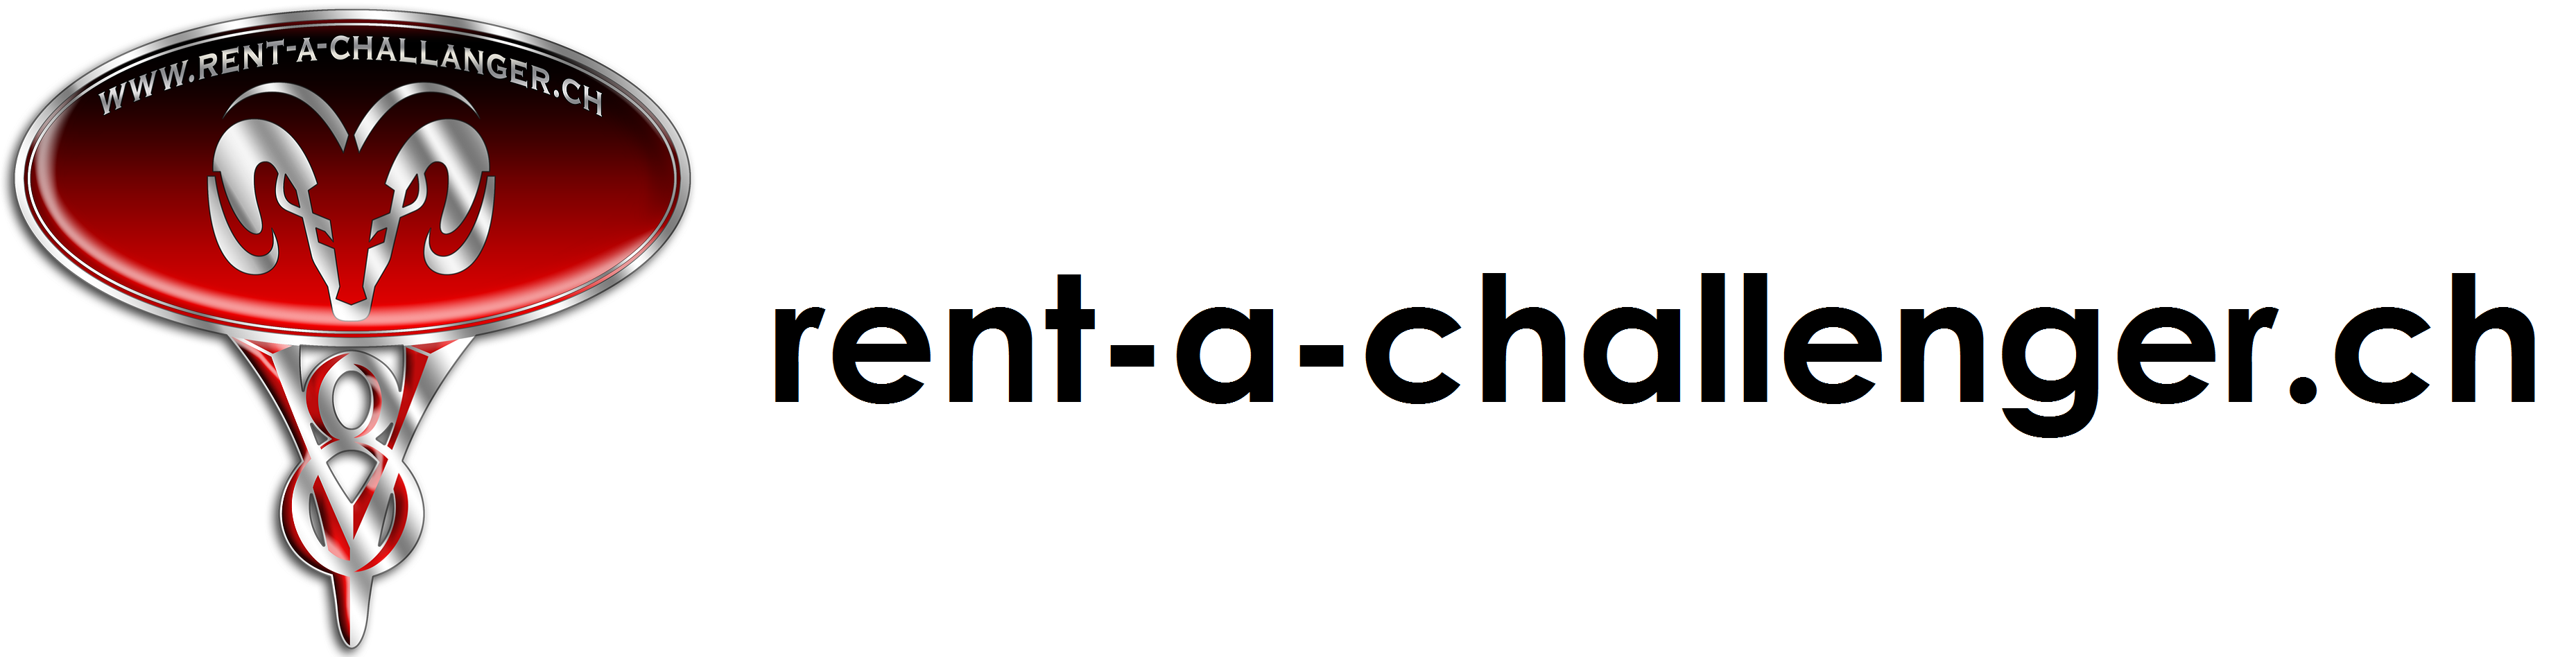 Logo_rent-a-challenger.ch_mit_Schrift